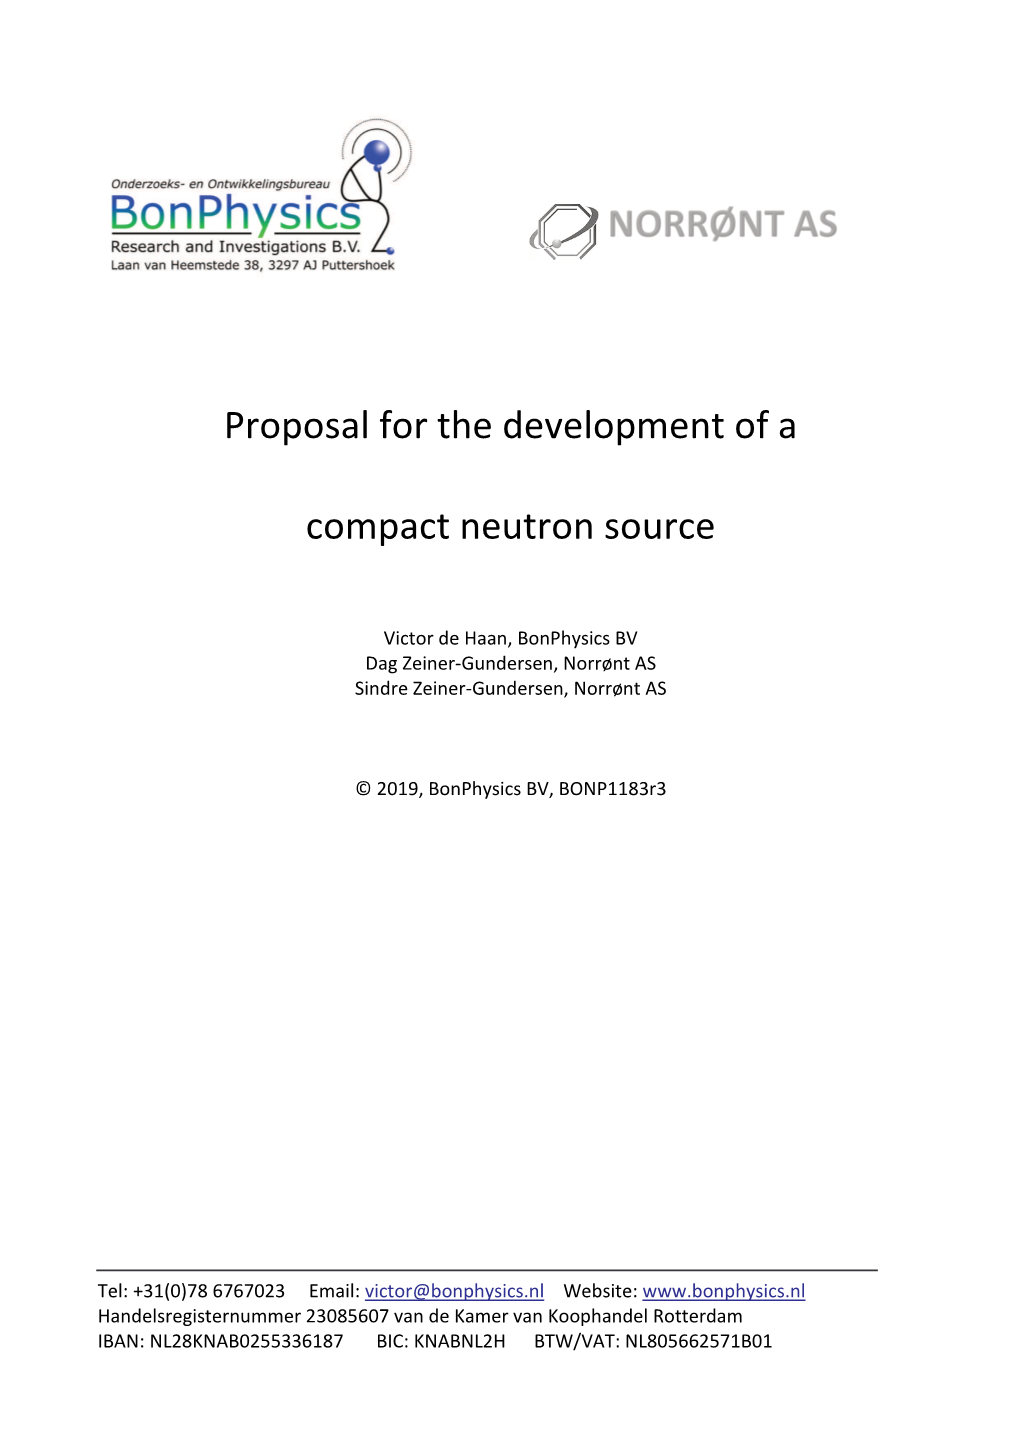 Proposal for the Development of a Compact Neutron Source, Bonp1183r3